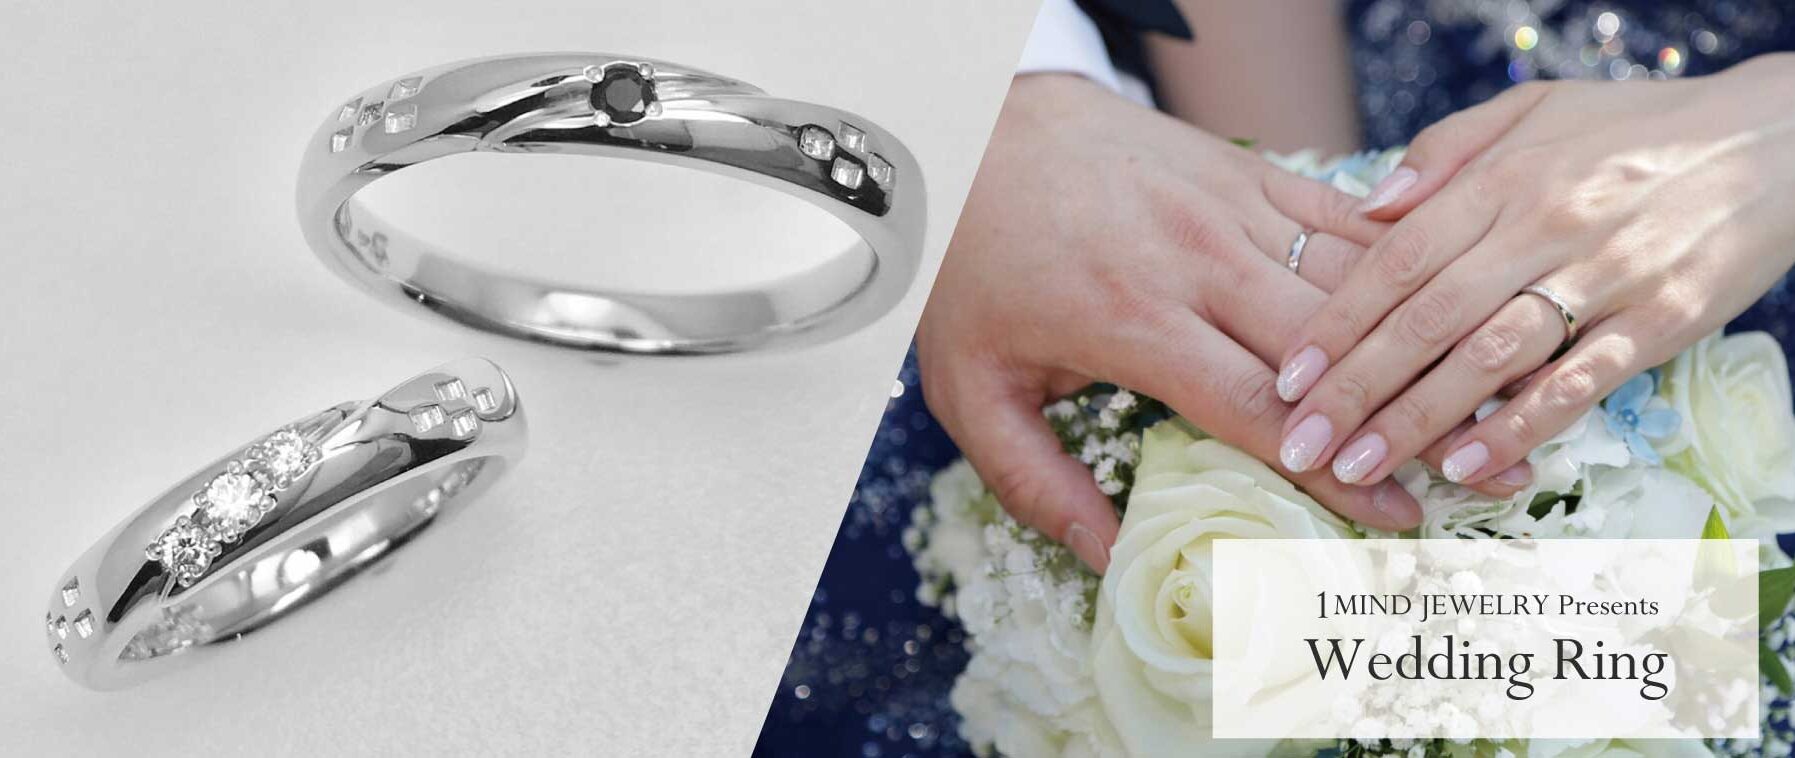 1 Mind Jewelry 沖縄の安い手作り結婚指輪専門店